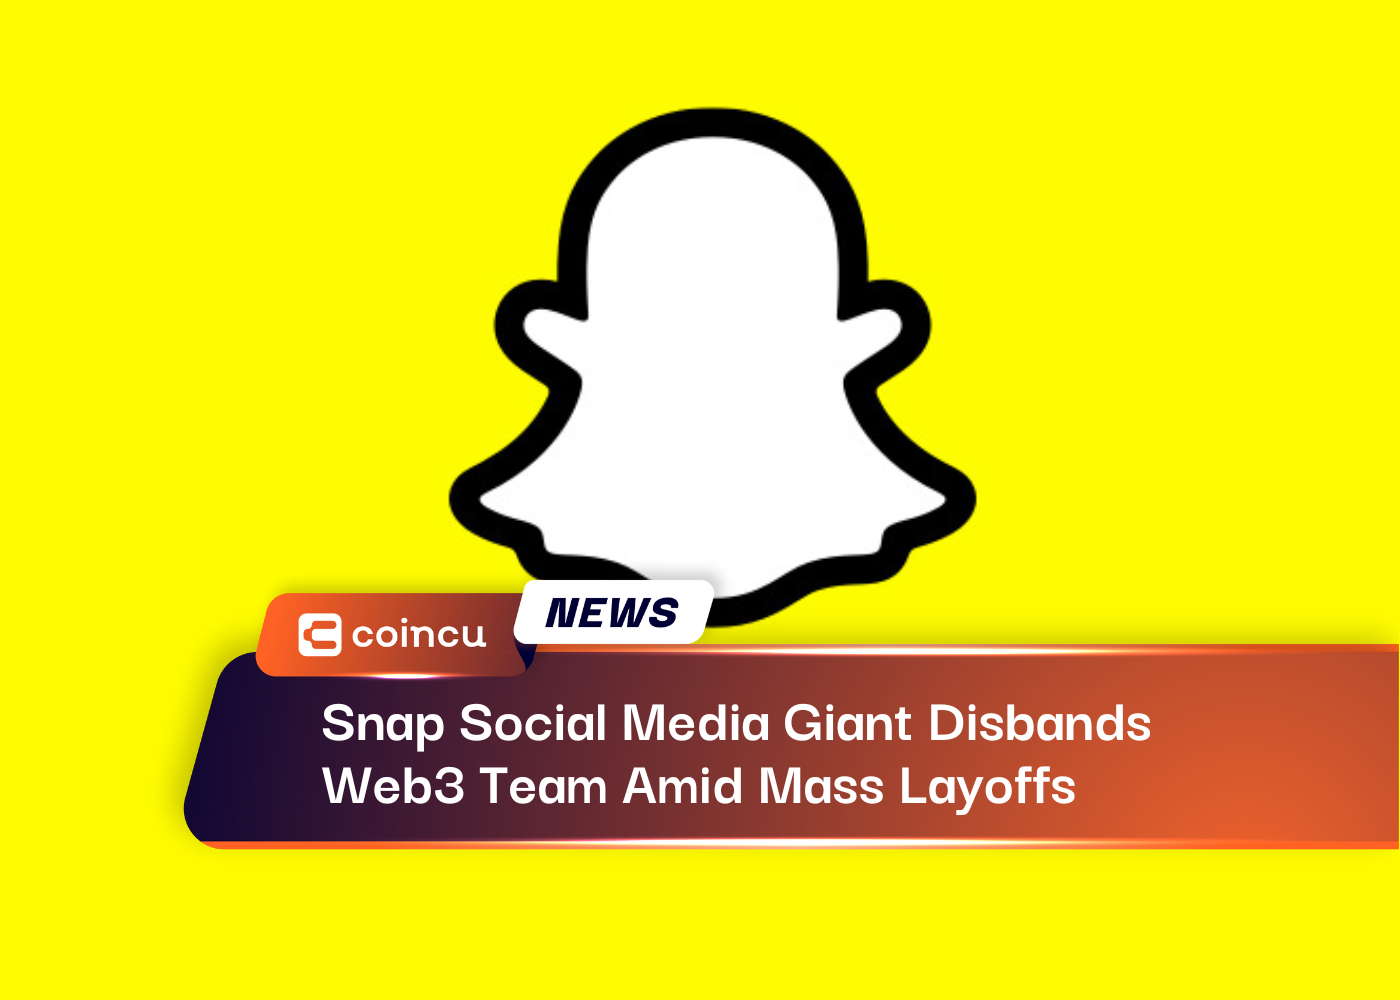 Snap Social Media Giant Disbands